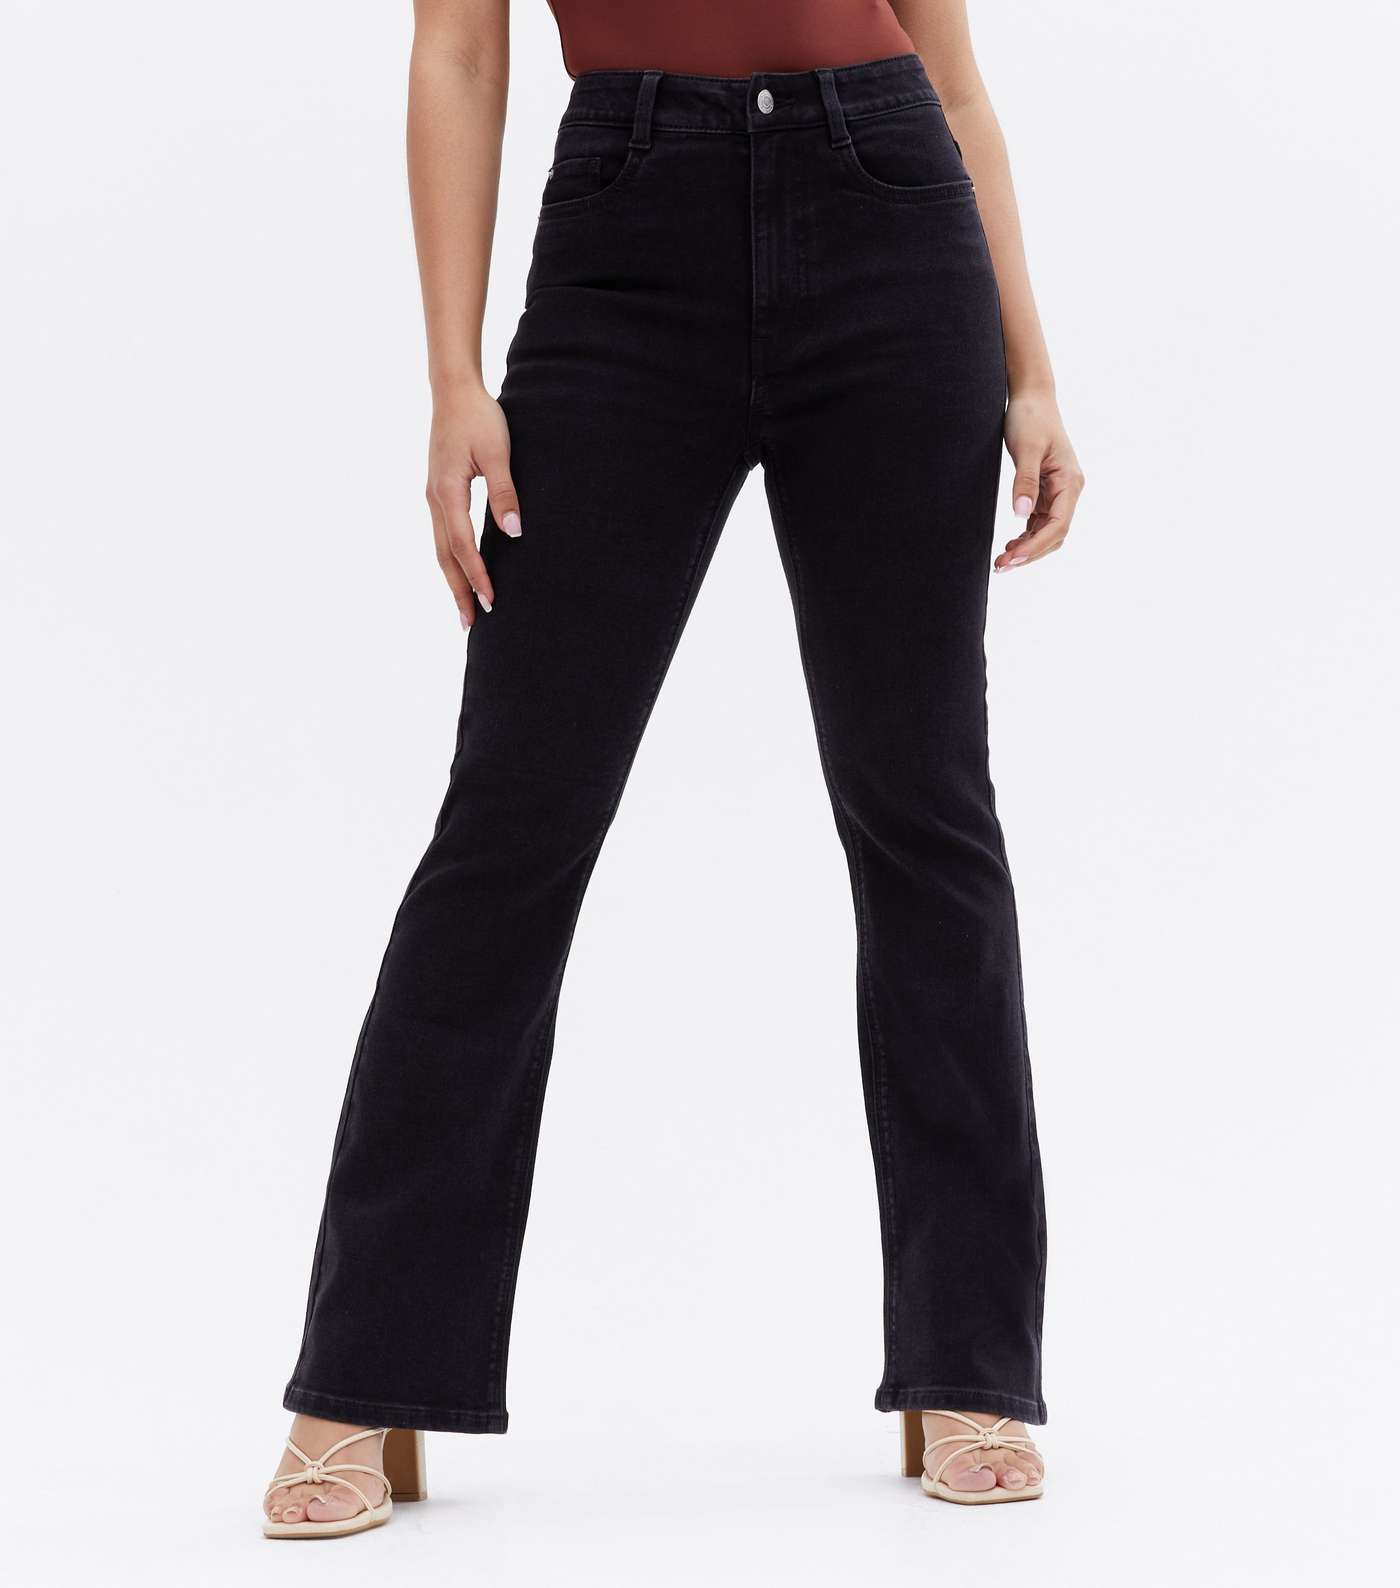 Petite Black Waist Enhance Quinn Bootcut Jeans Image 2